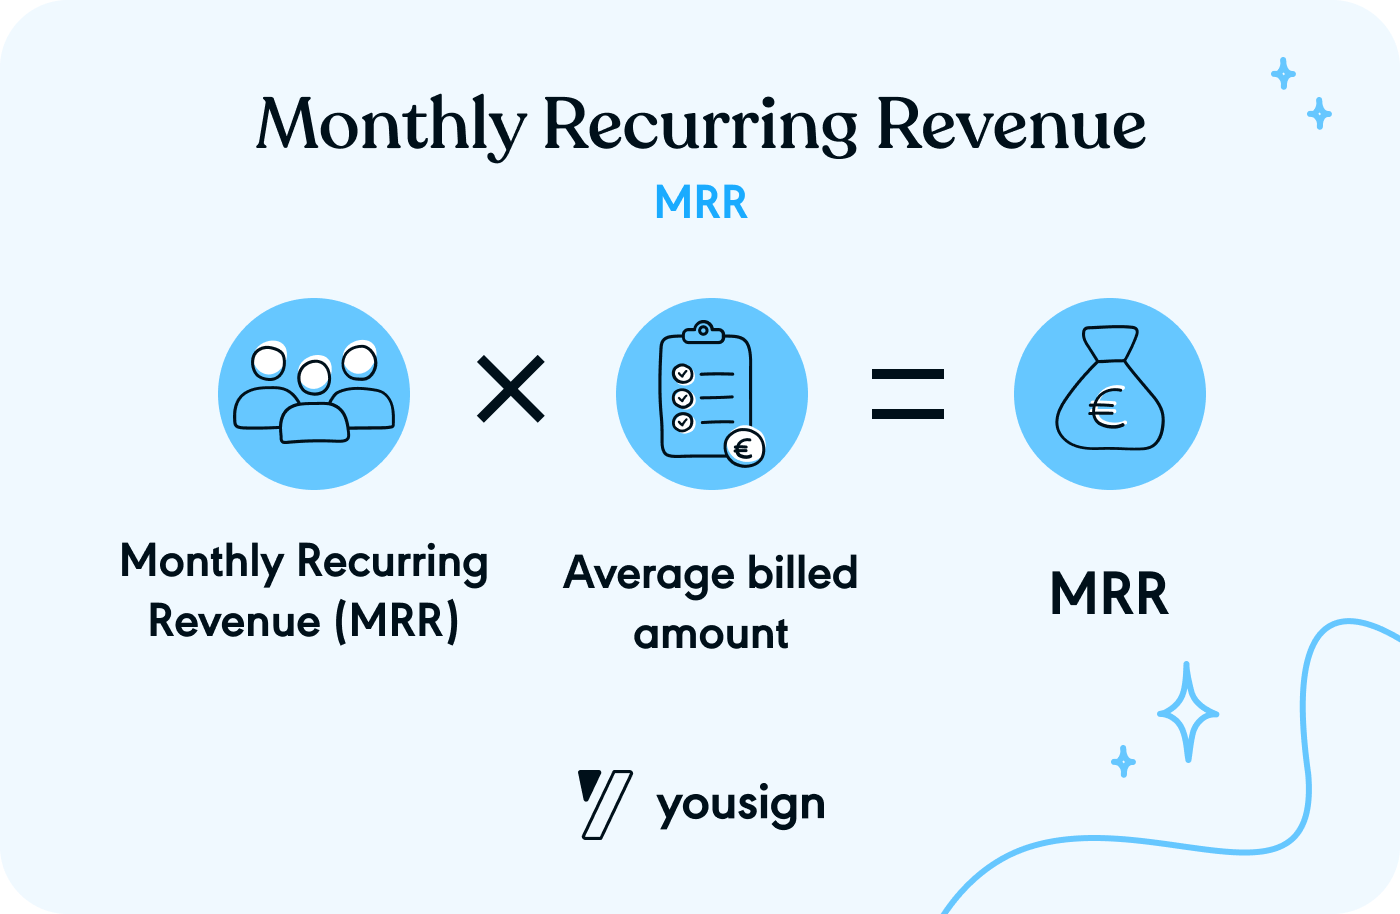 Calcul du MRR (Monthly Recurring Revenue)